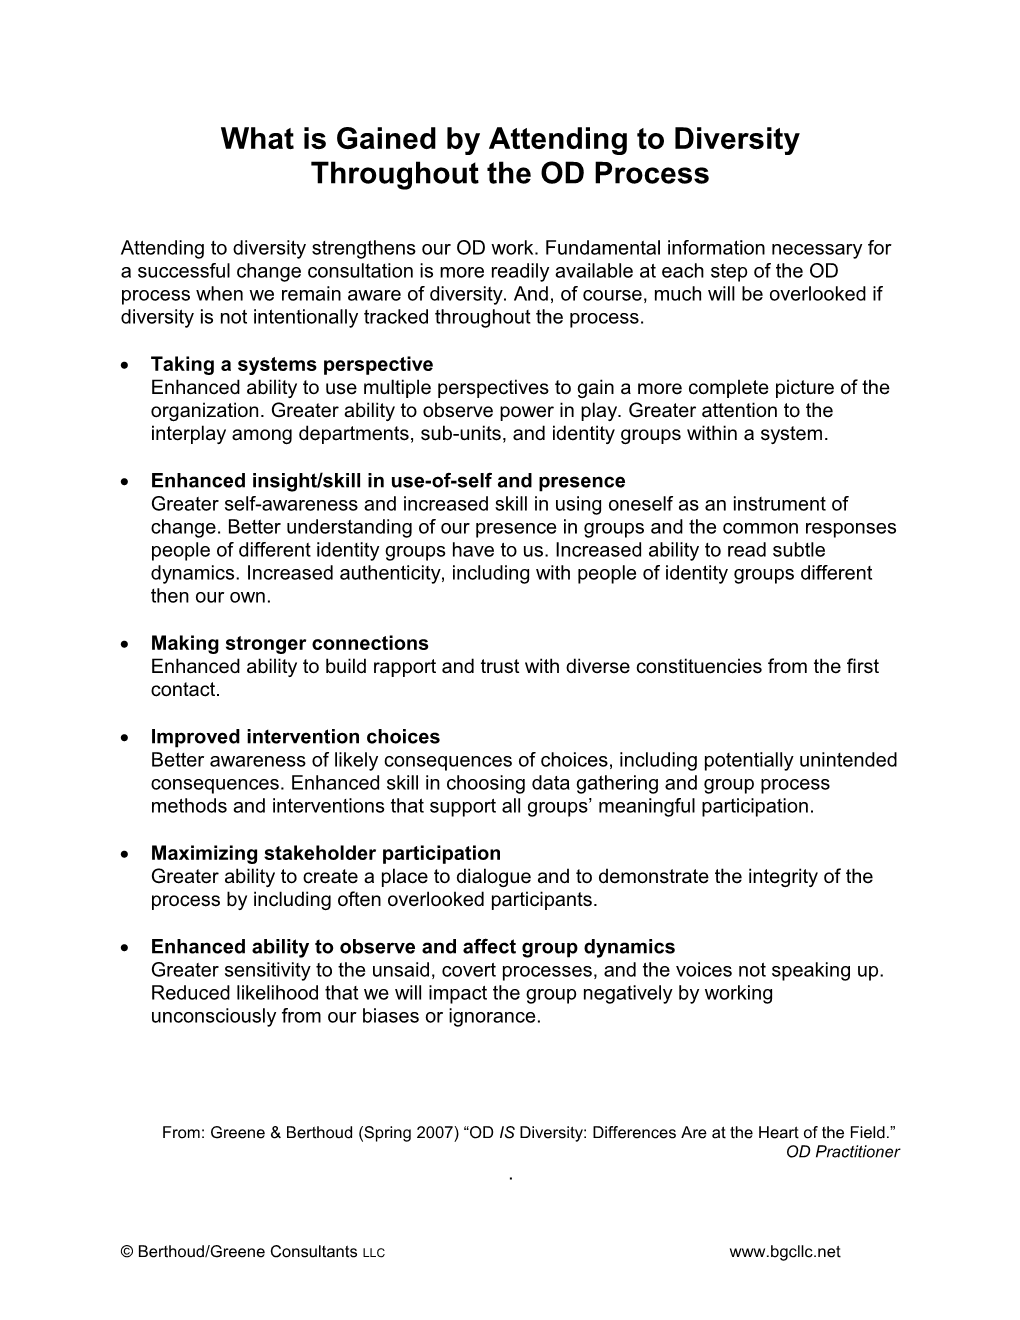 ODN Proceedings Intro